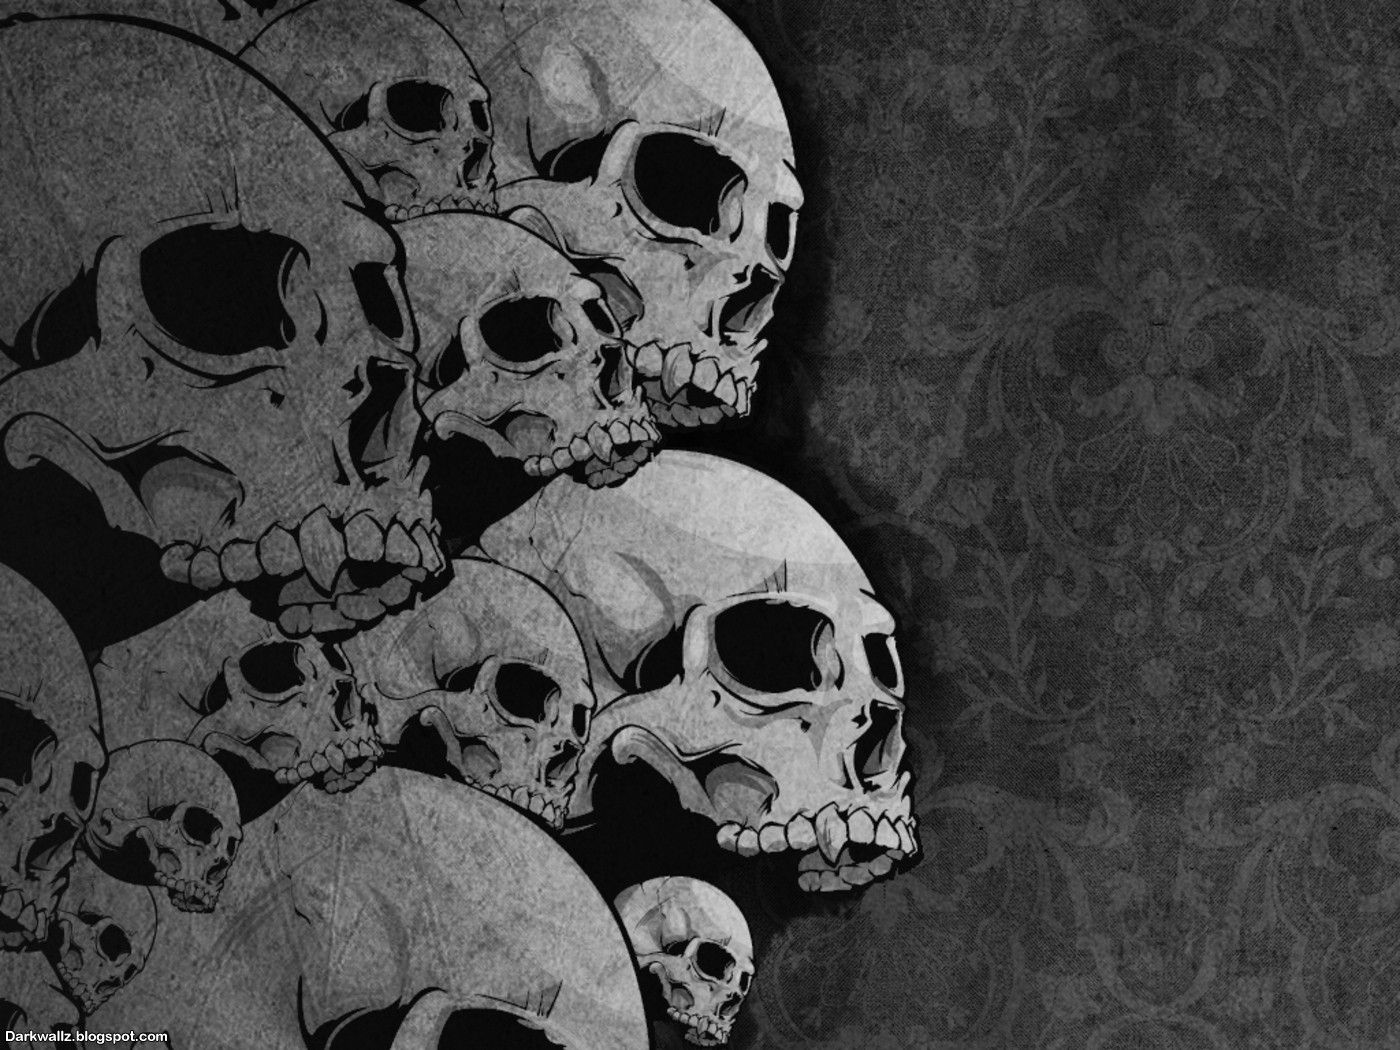 Fondos de Pantalla de Calaveras  Skull wallpaper Black skulls wallpaper  Edgy wallpaper